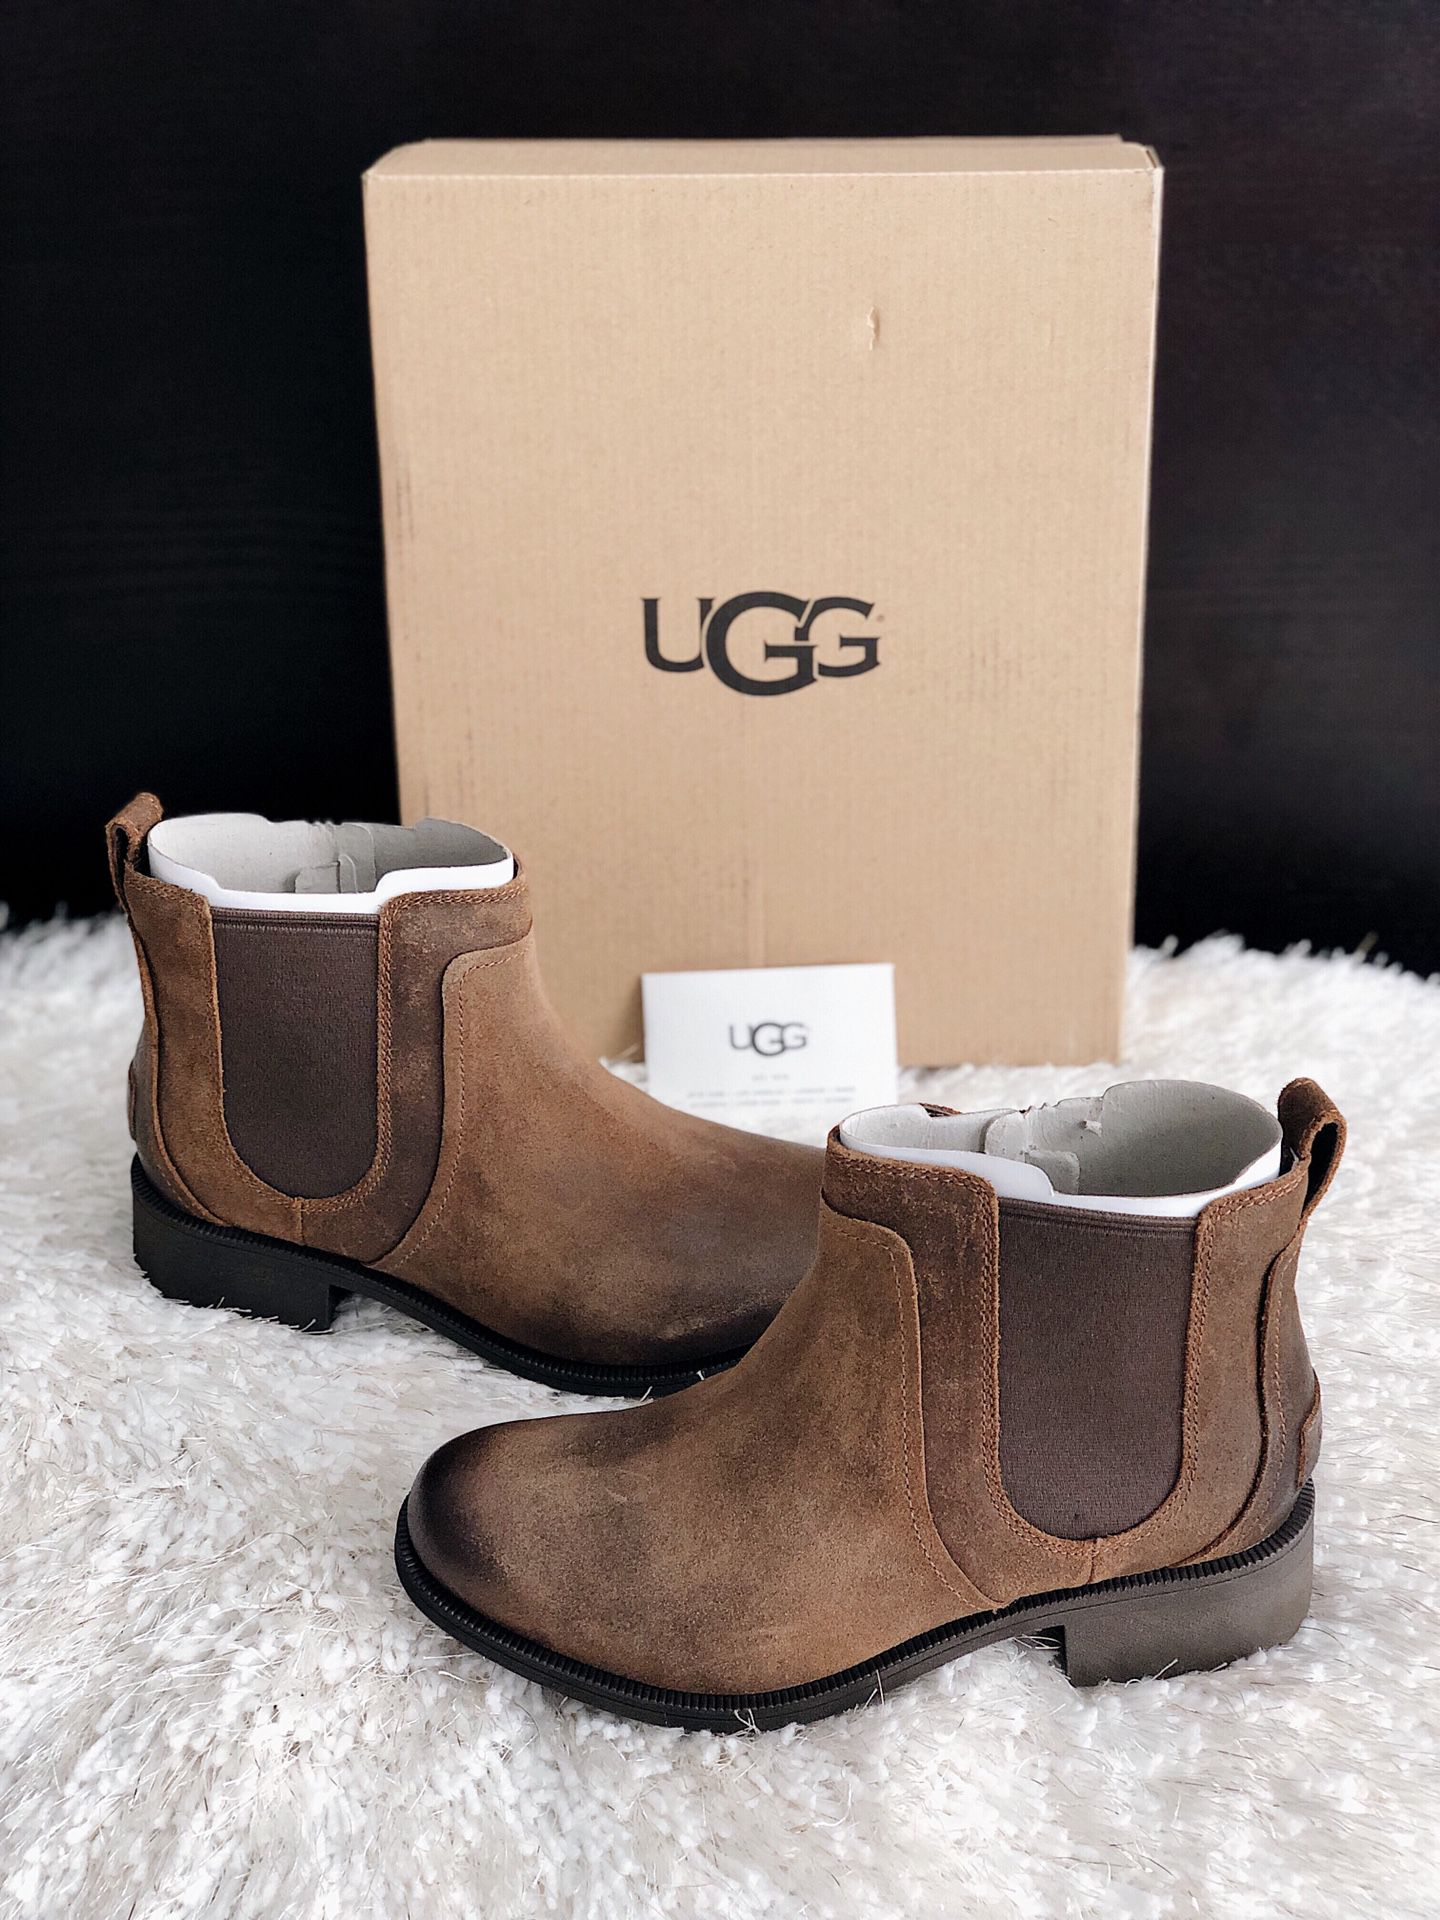 ✨New UGG Australia Bonham II Waterproof Chelsea Boots Brown Women’s Shoes Size 7M